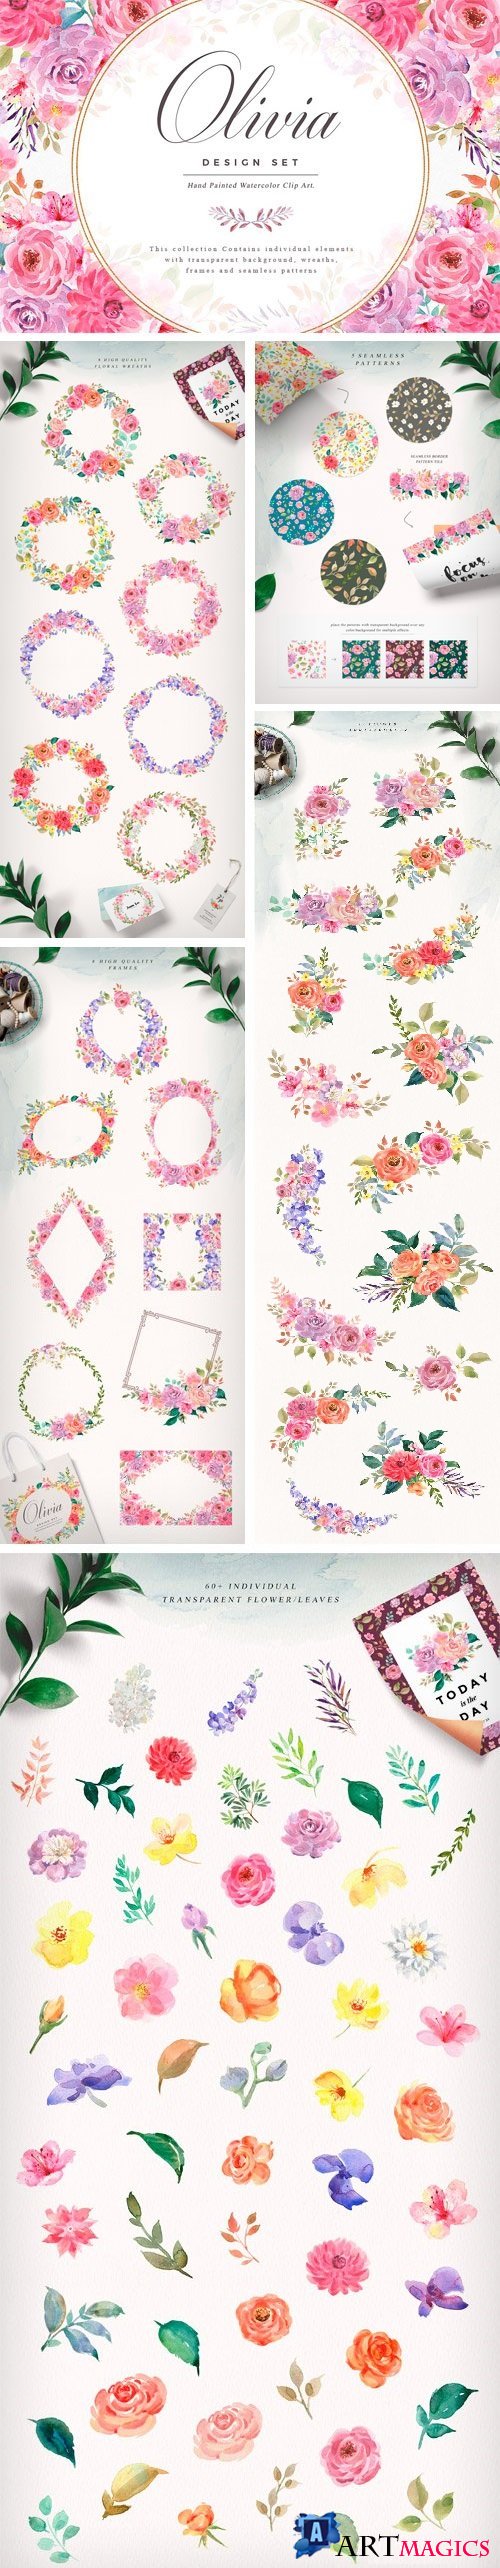 Watercolor Flowers - Olivia - 2066548